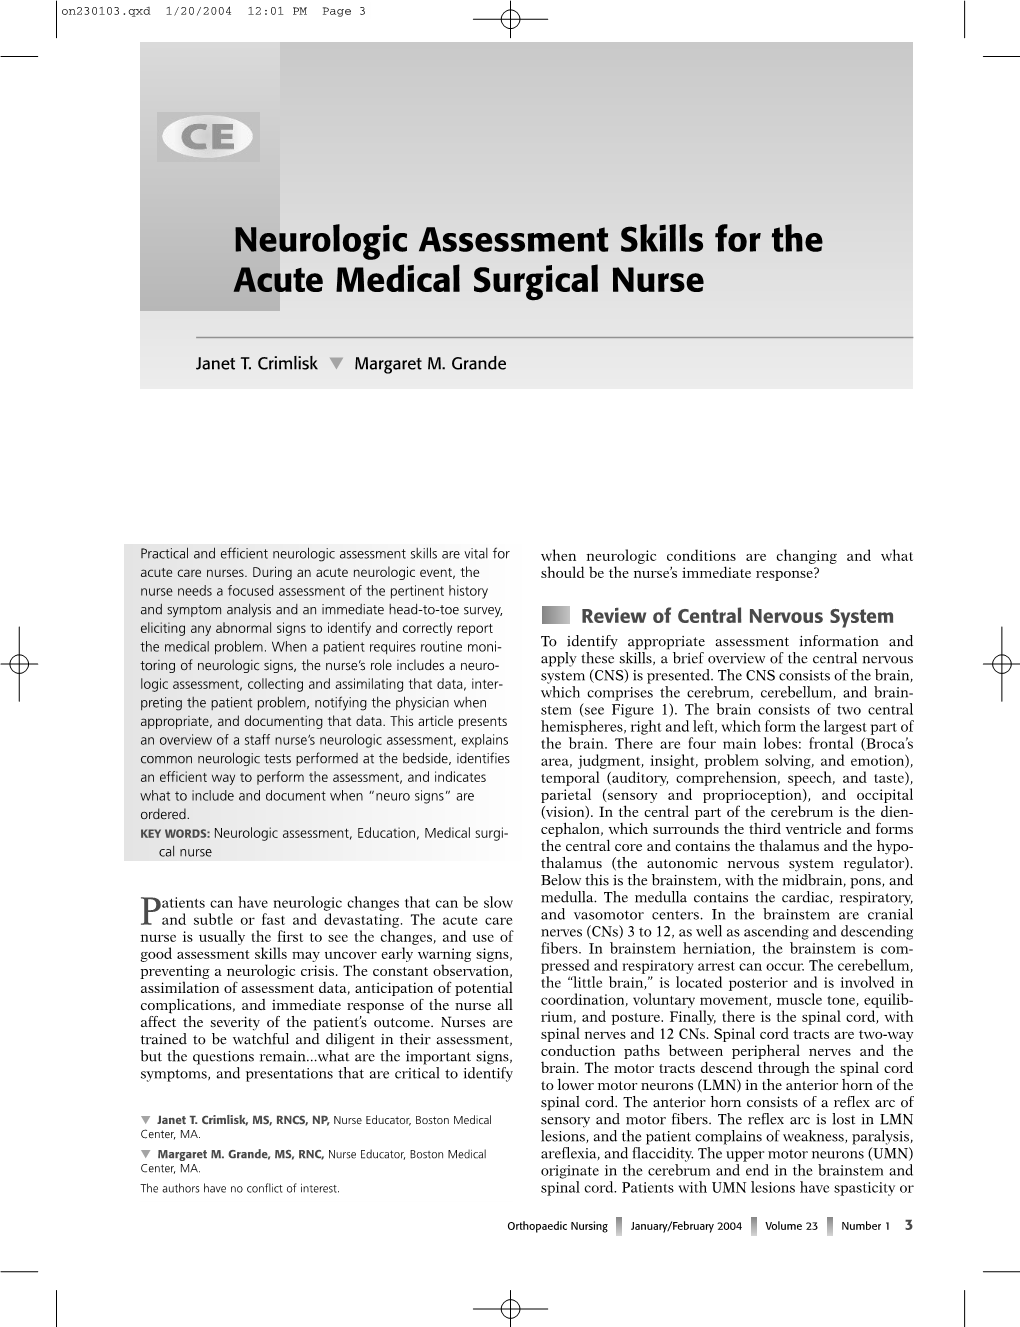 Neurologic Assessment Skills for the Acute Medical Surgical Nurse